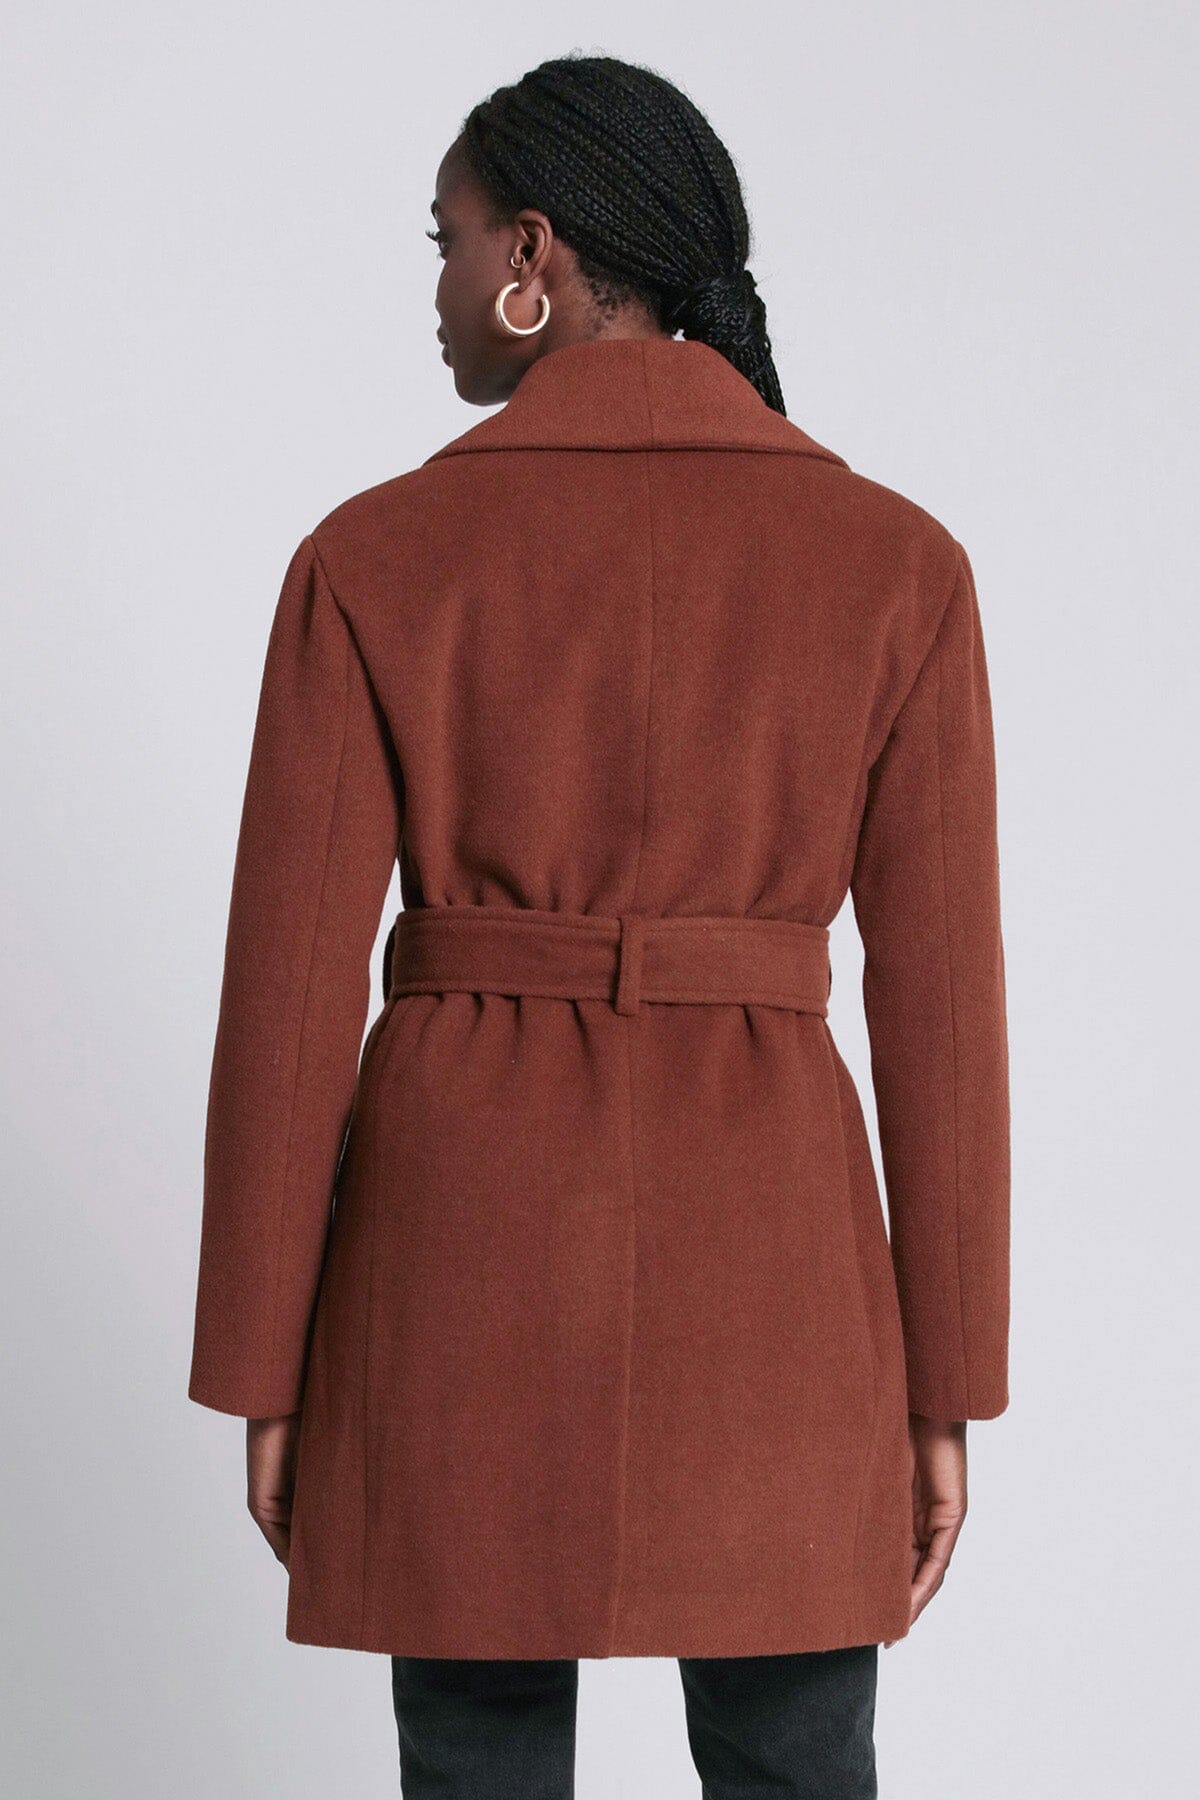 Cinnamon brown wool blend belted shawl collar peacoat coat - figure flattering cute work peacoats for women